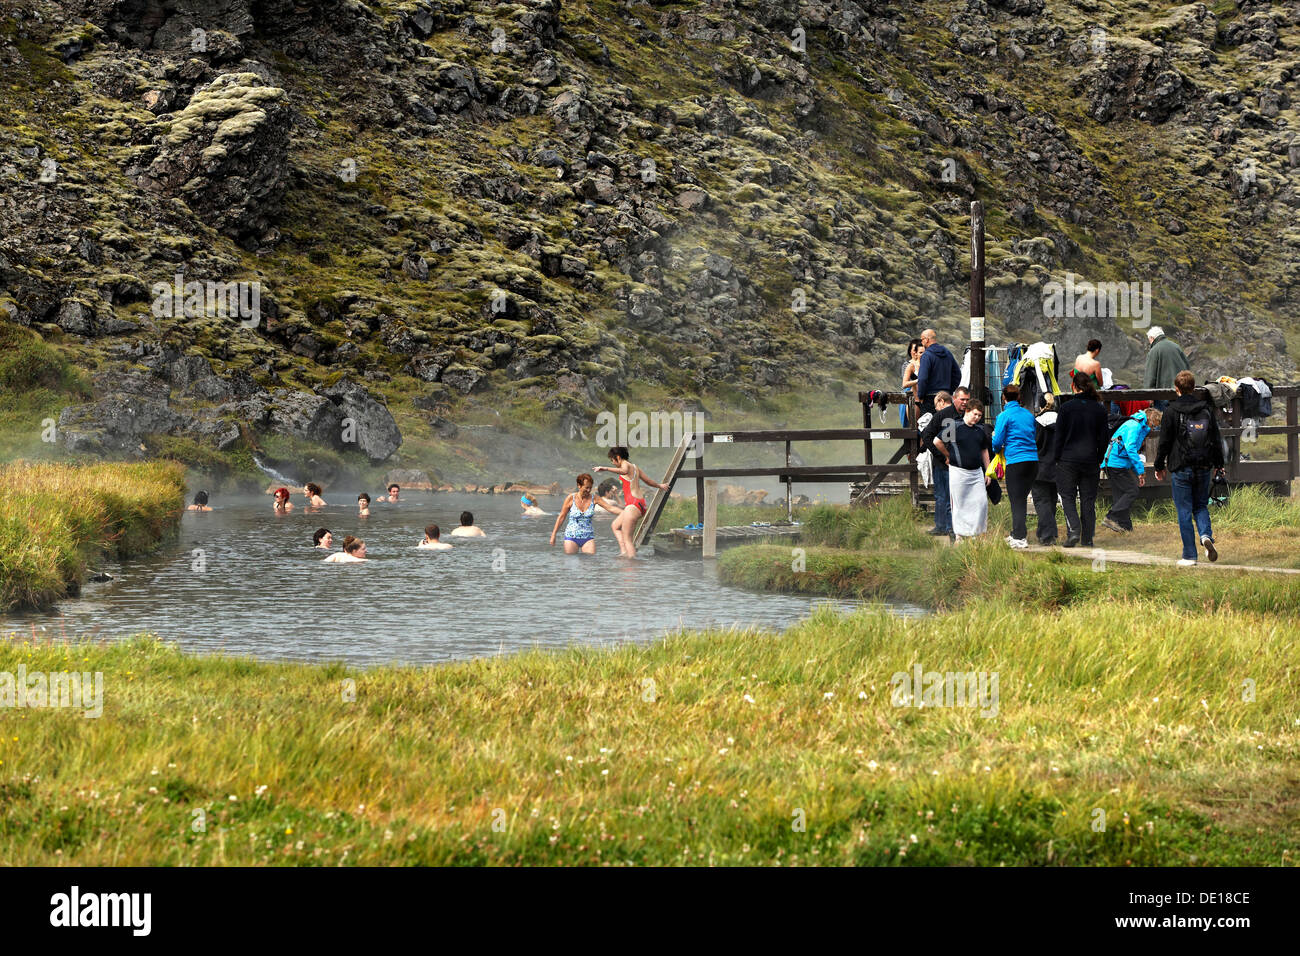 Hot spring ou piscine naturelle, Landmannalaugar Islande Banque D'Images